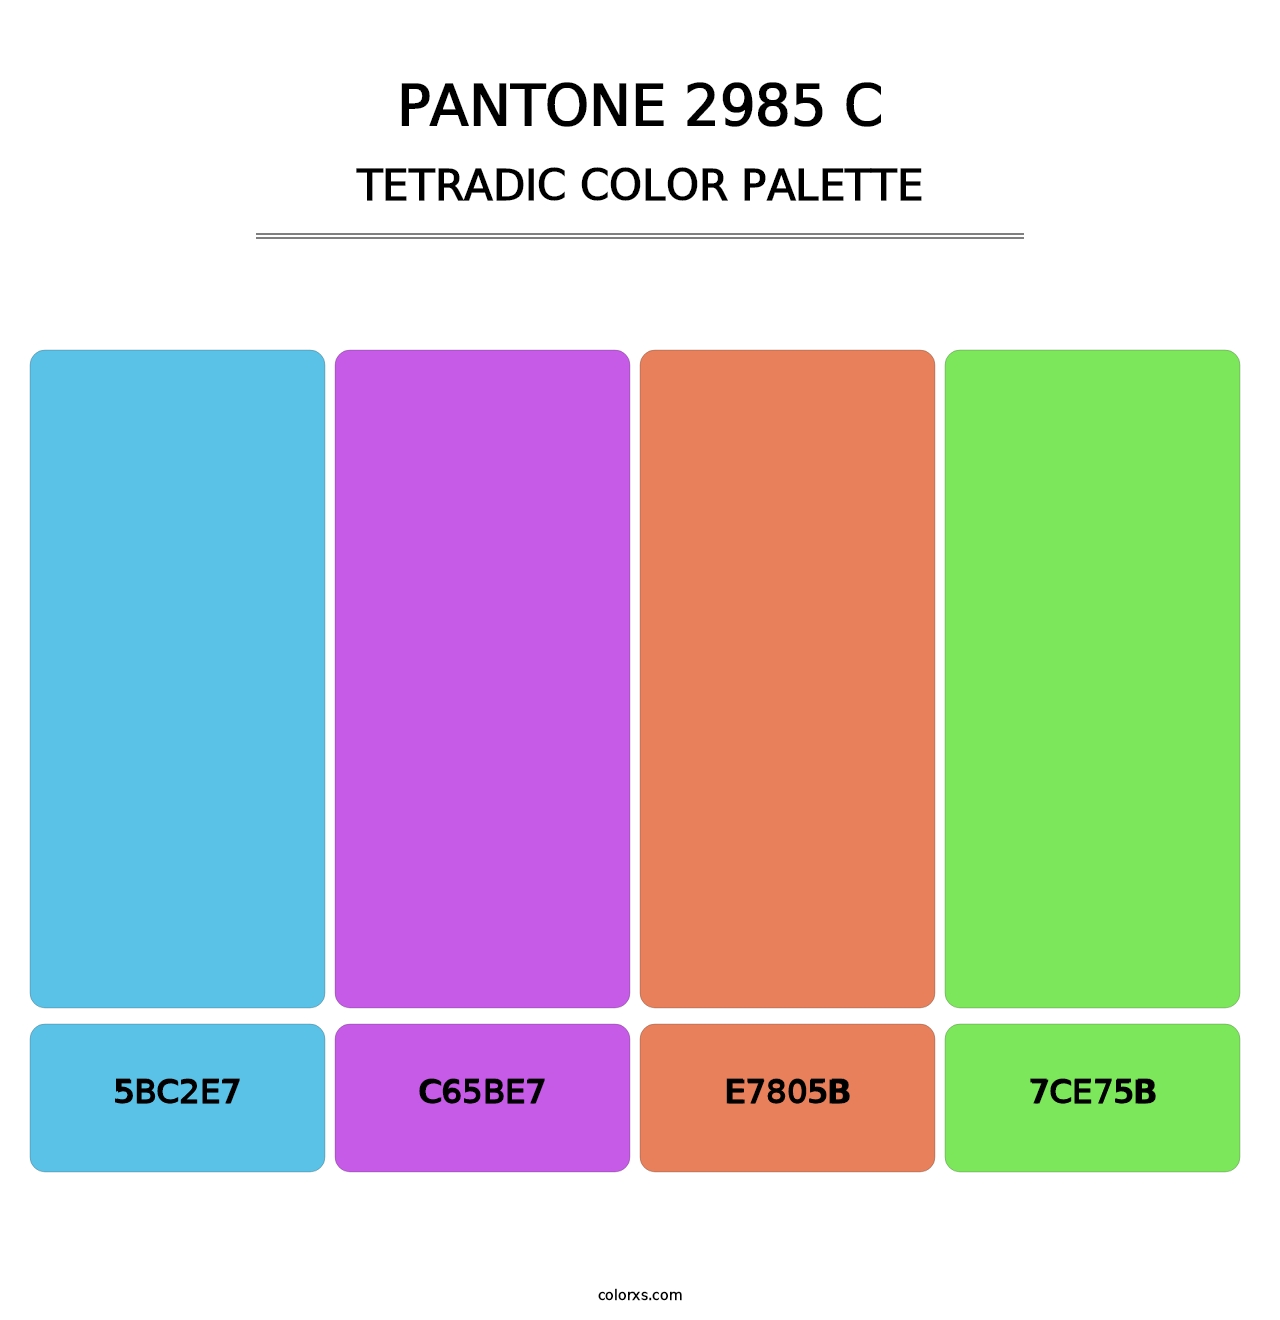 PANTONE 2985 C - Tetradic Color Palette